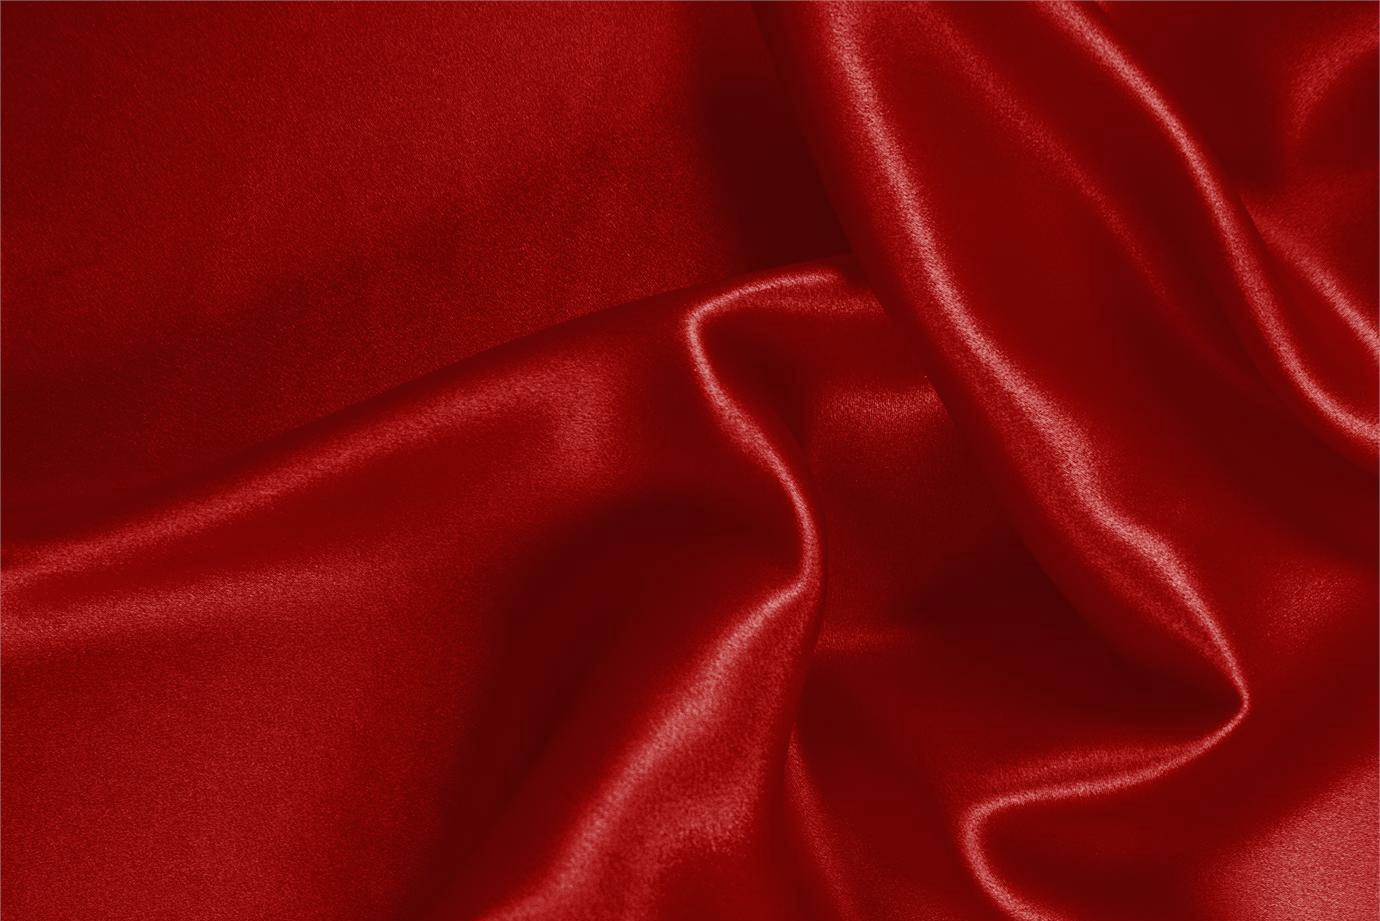 Red Silk, Stretch Silk Satin Stretch Apparel Fabric UN000623